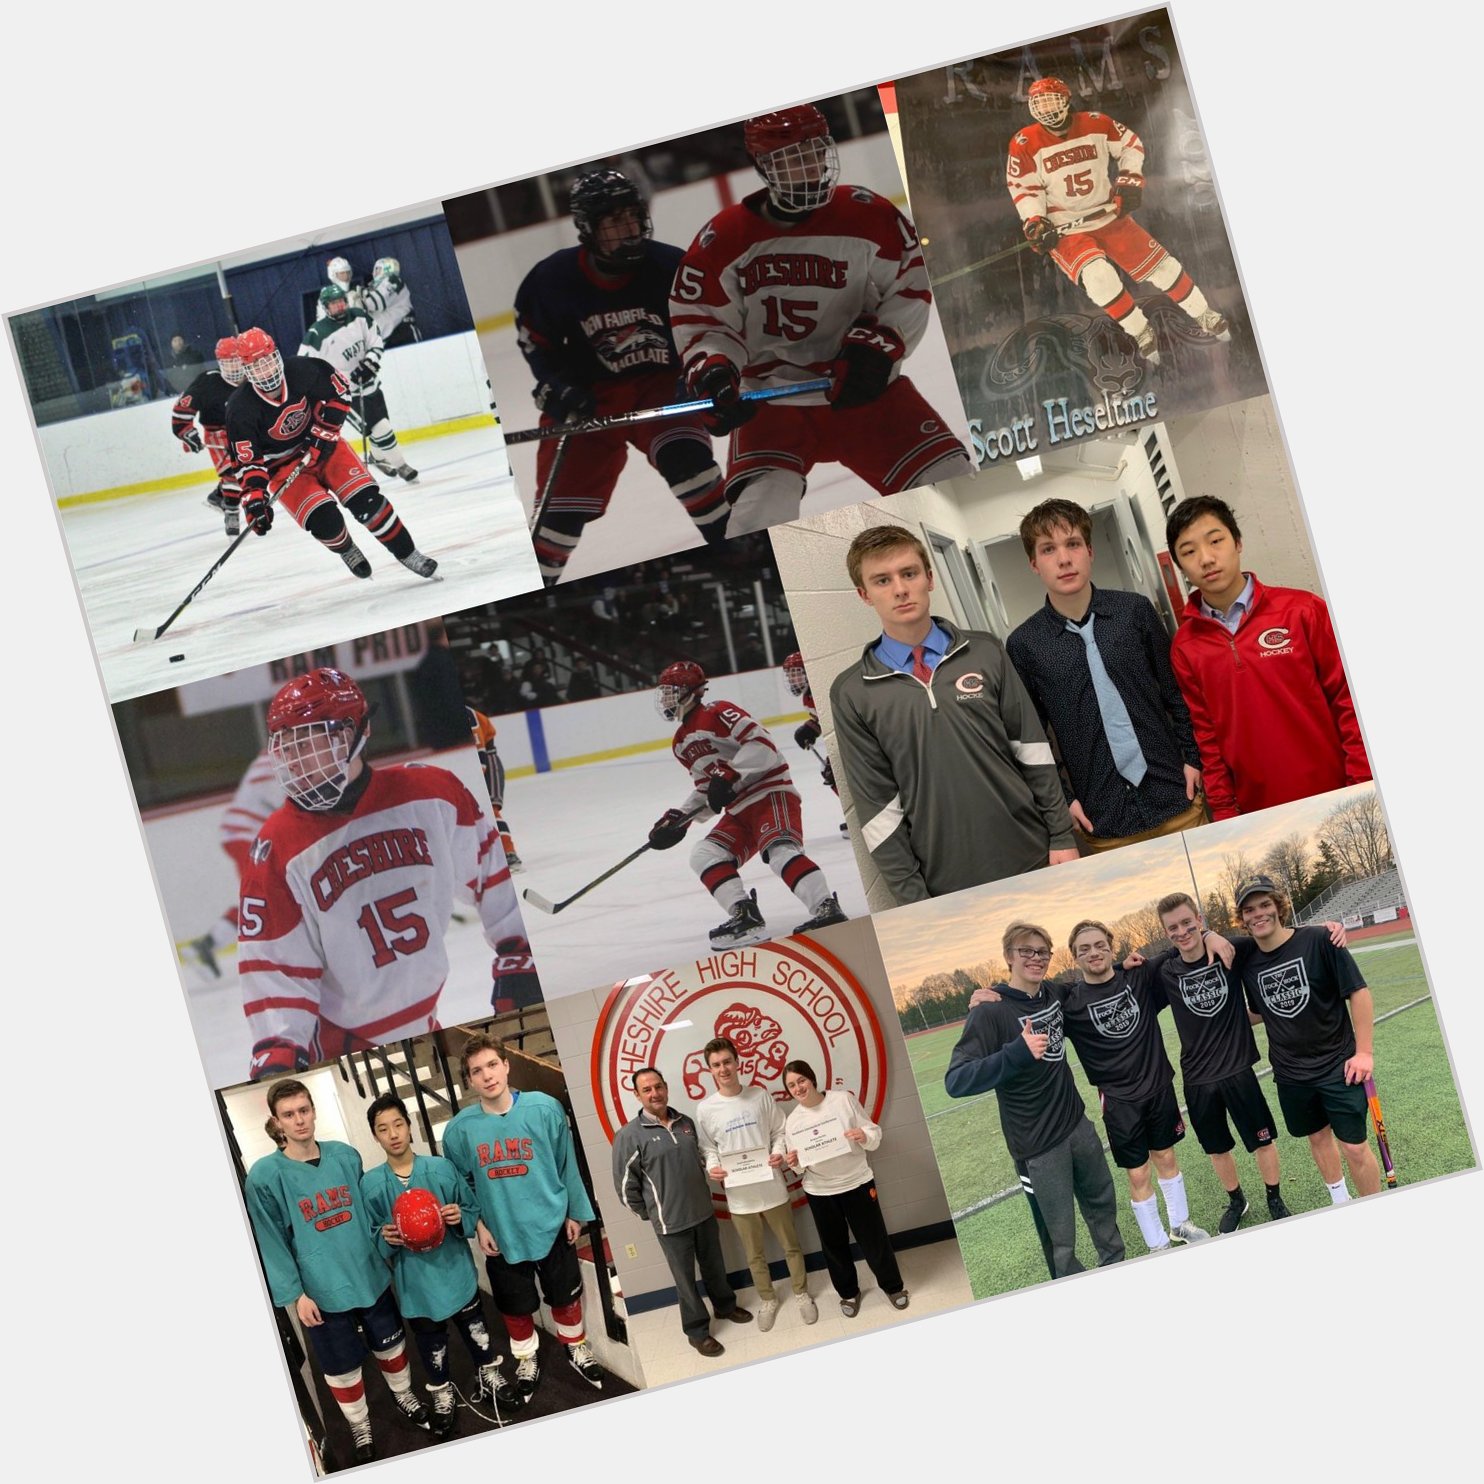 Happy birthday to former Cheshire ice hockey player, Scott Heseltine, and Cheshire s Michael Kelly! 